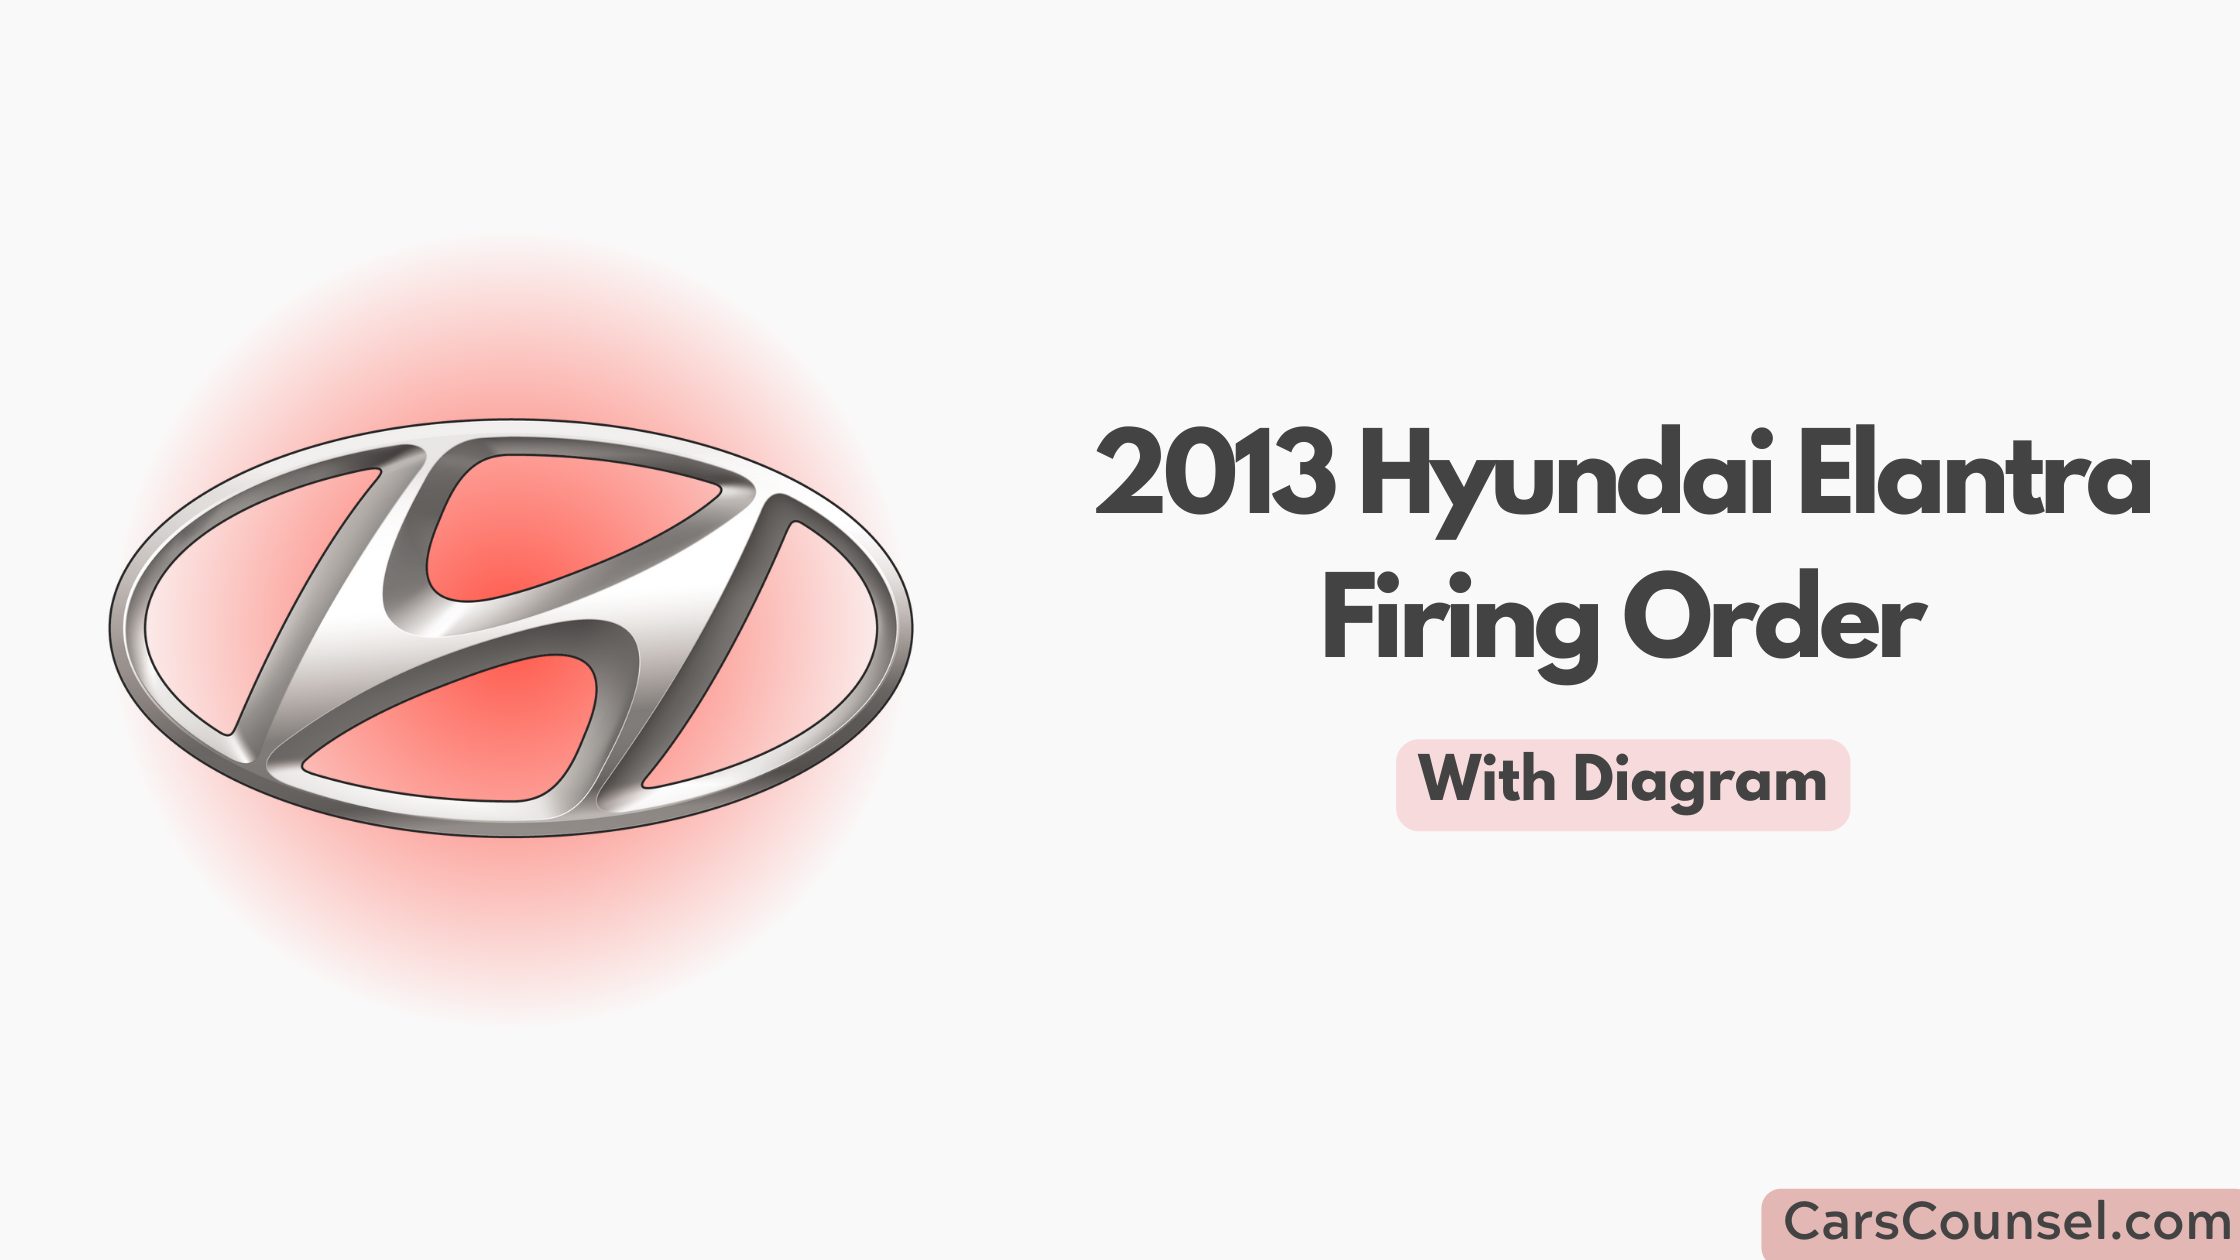 2013 Hyundai Elantra Firing Order With Diagram